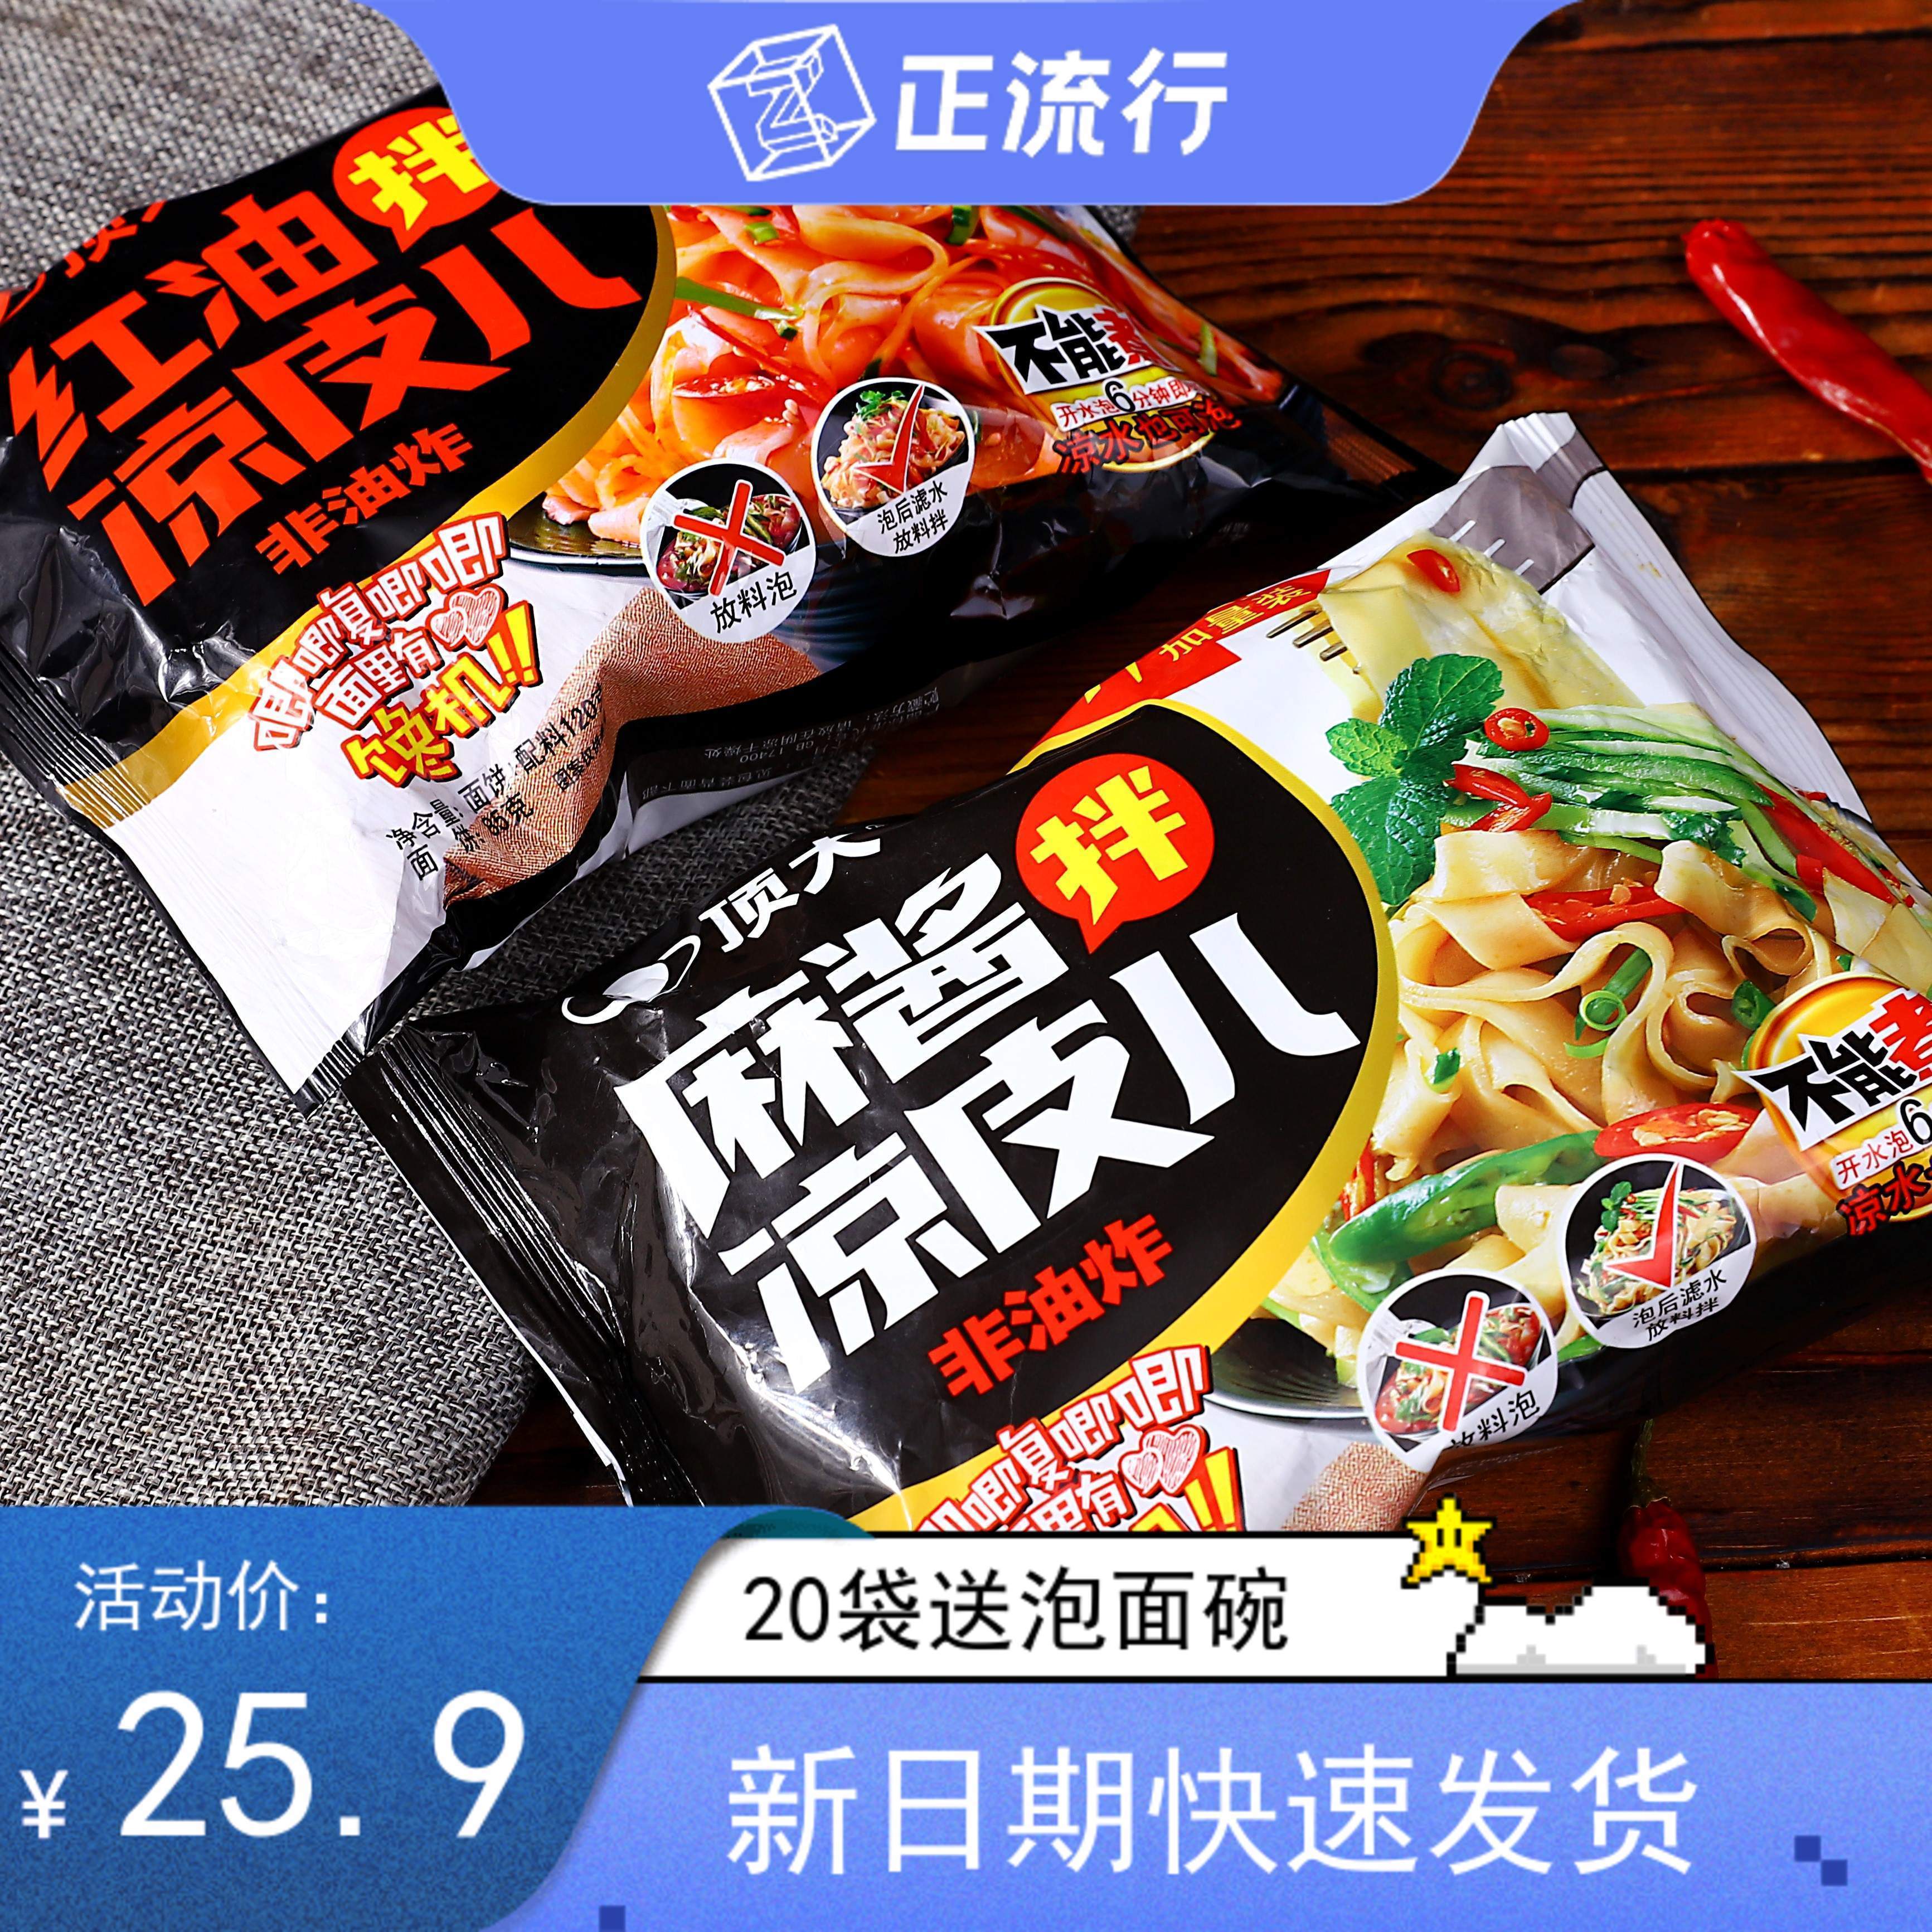 Chinese Food Snacks Dingda Dry noodles 顶大面皮非油炸方便面热汤红油凉皮拌面擀面皮粉丝速食10袋整箱 